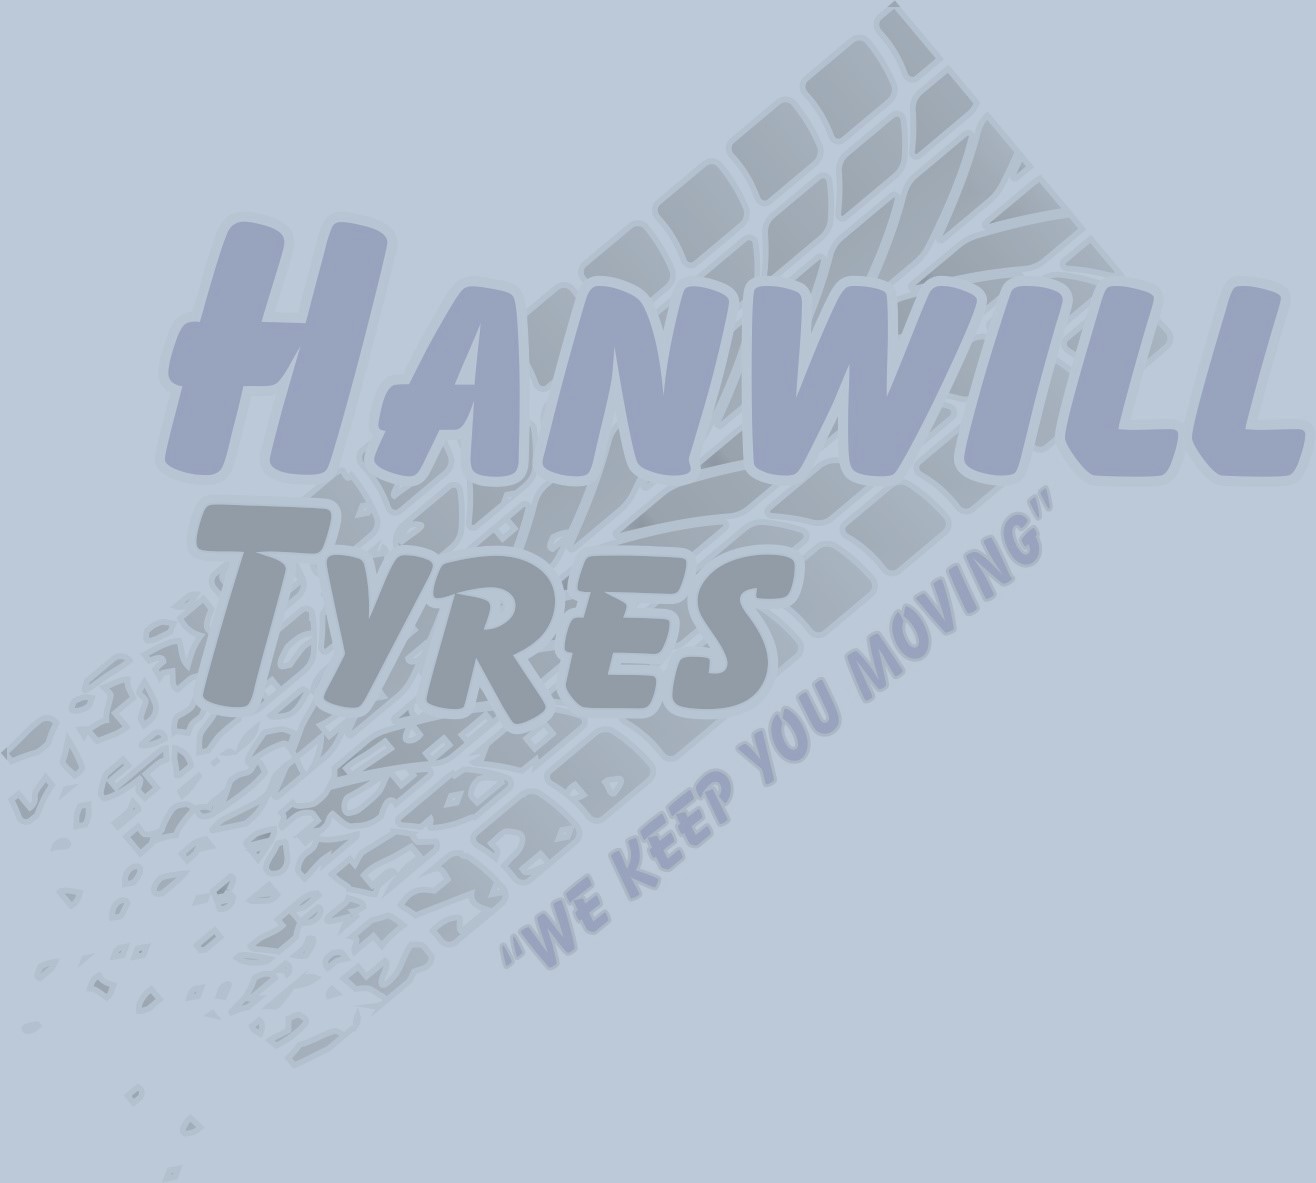 hanwill logo final